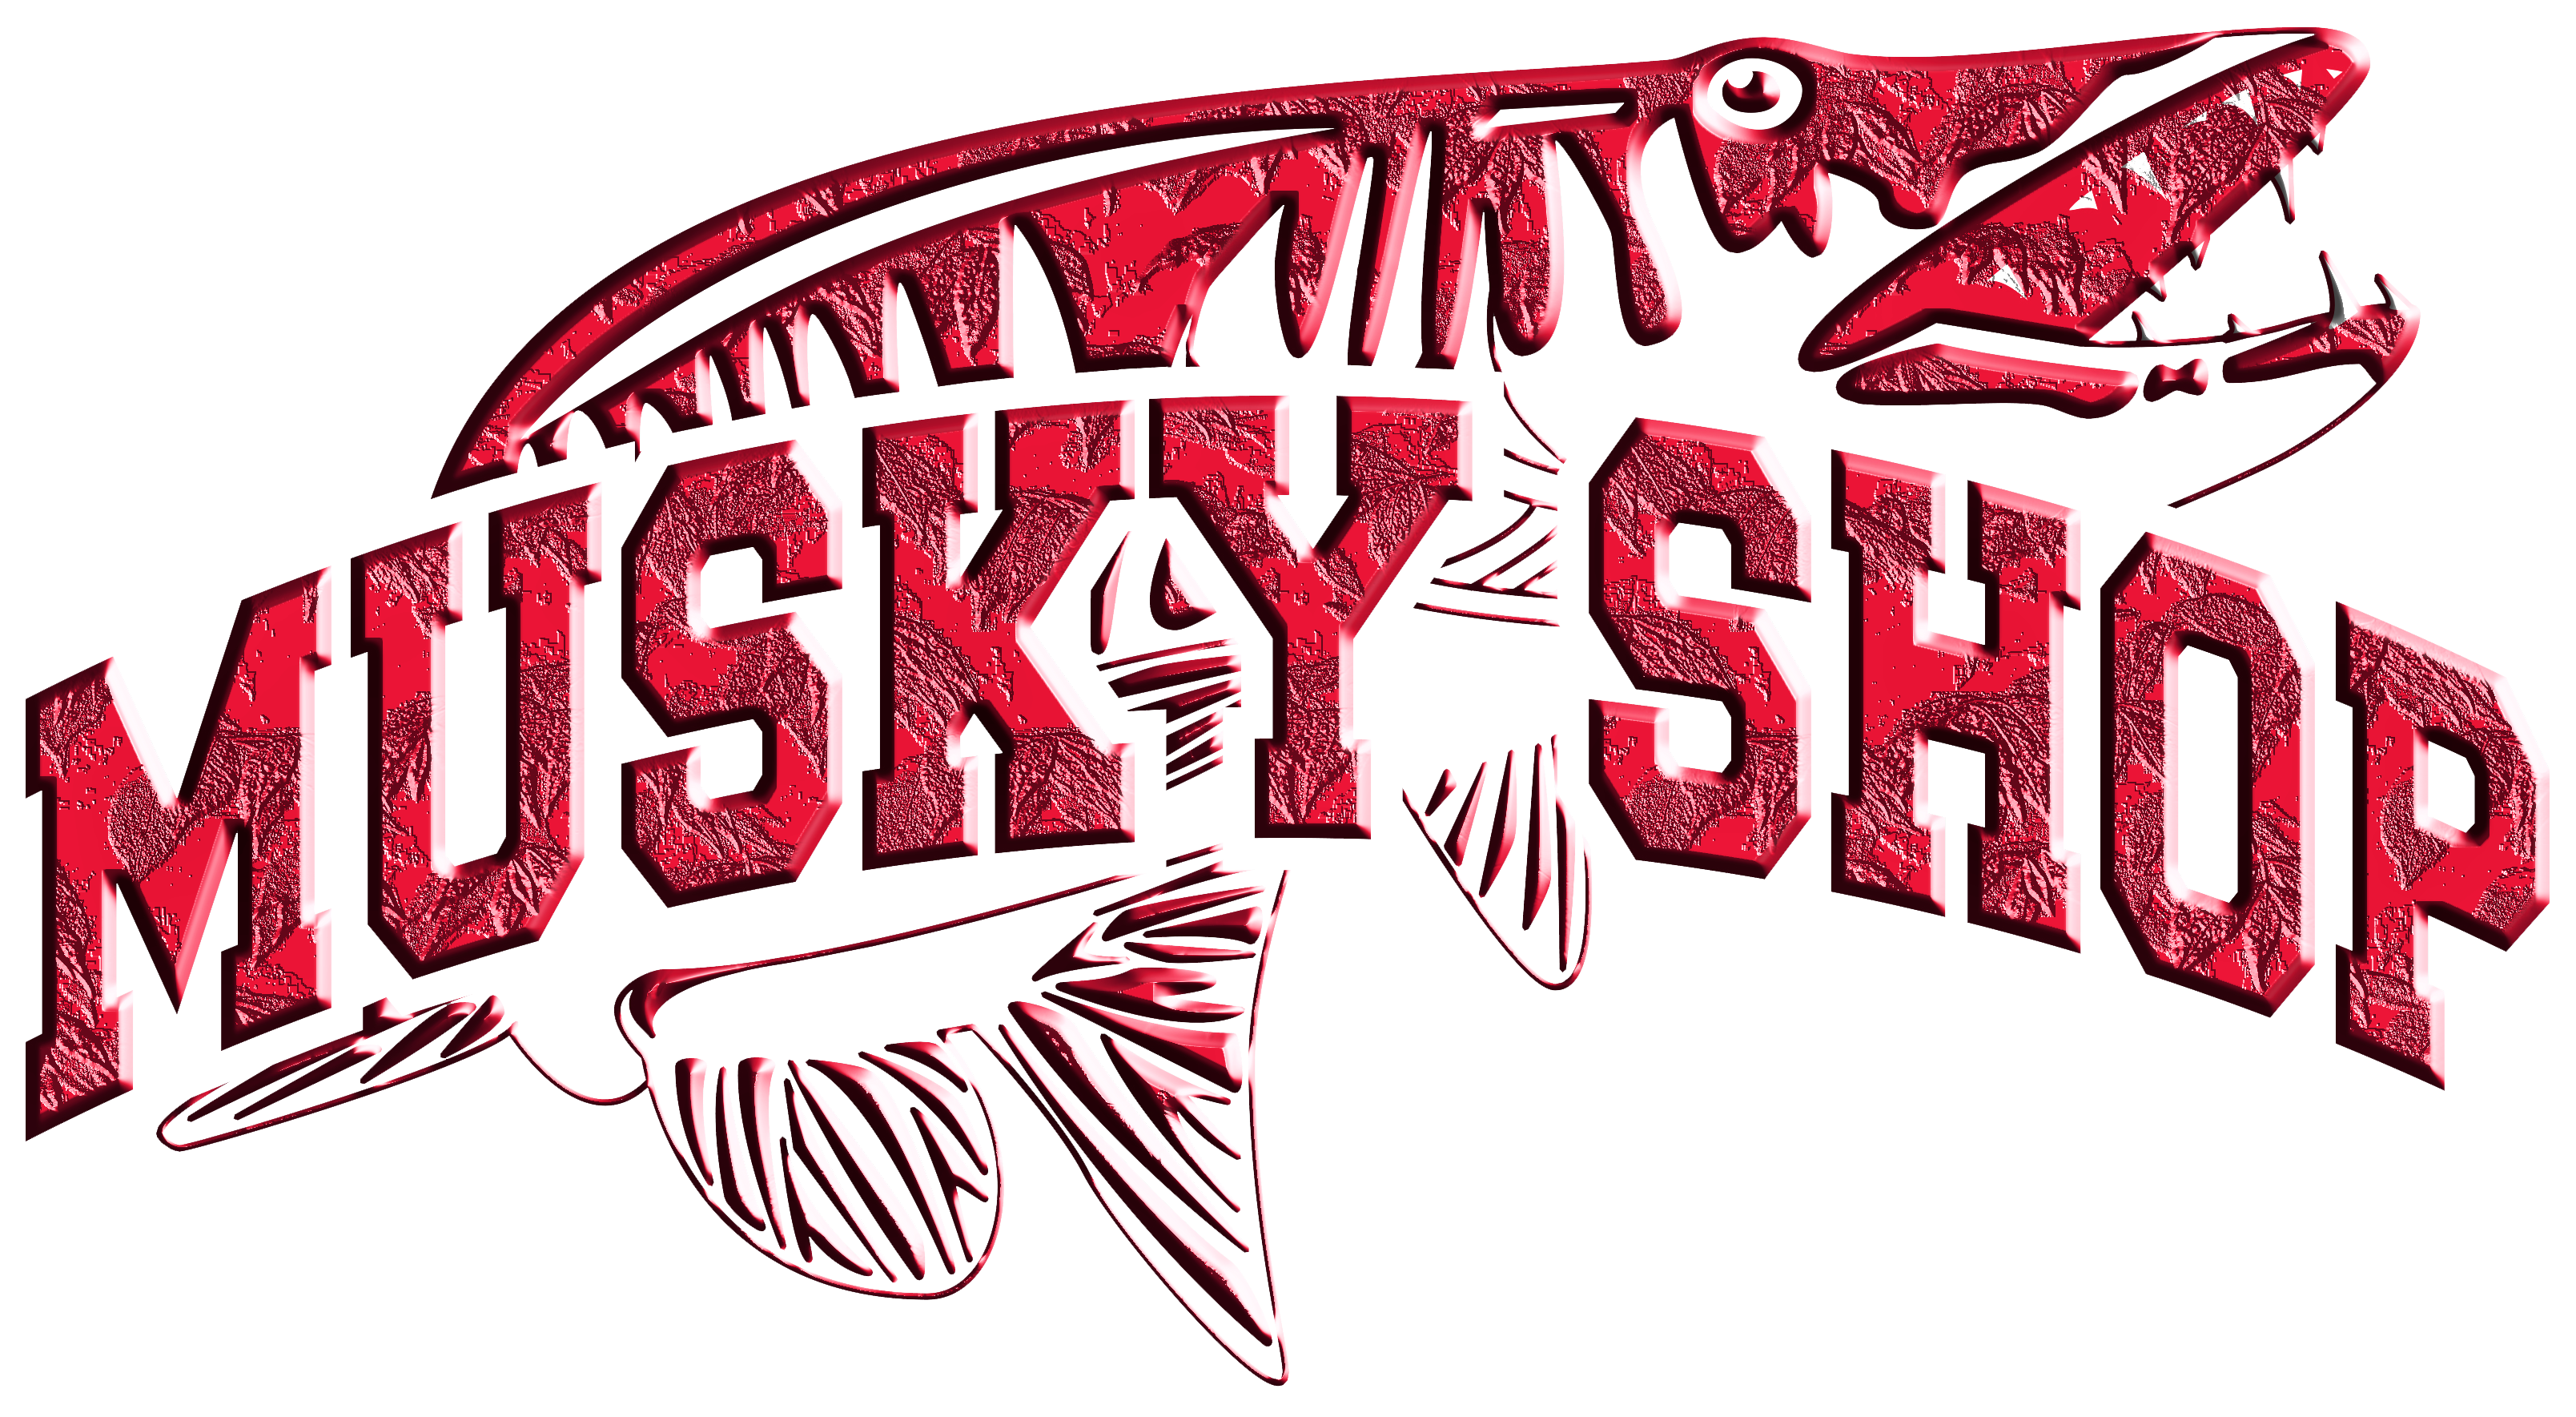 musky shop logo 5-14-20 stone red final 2